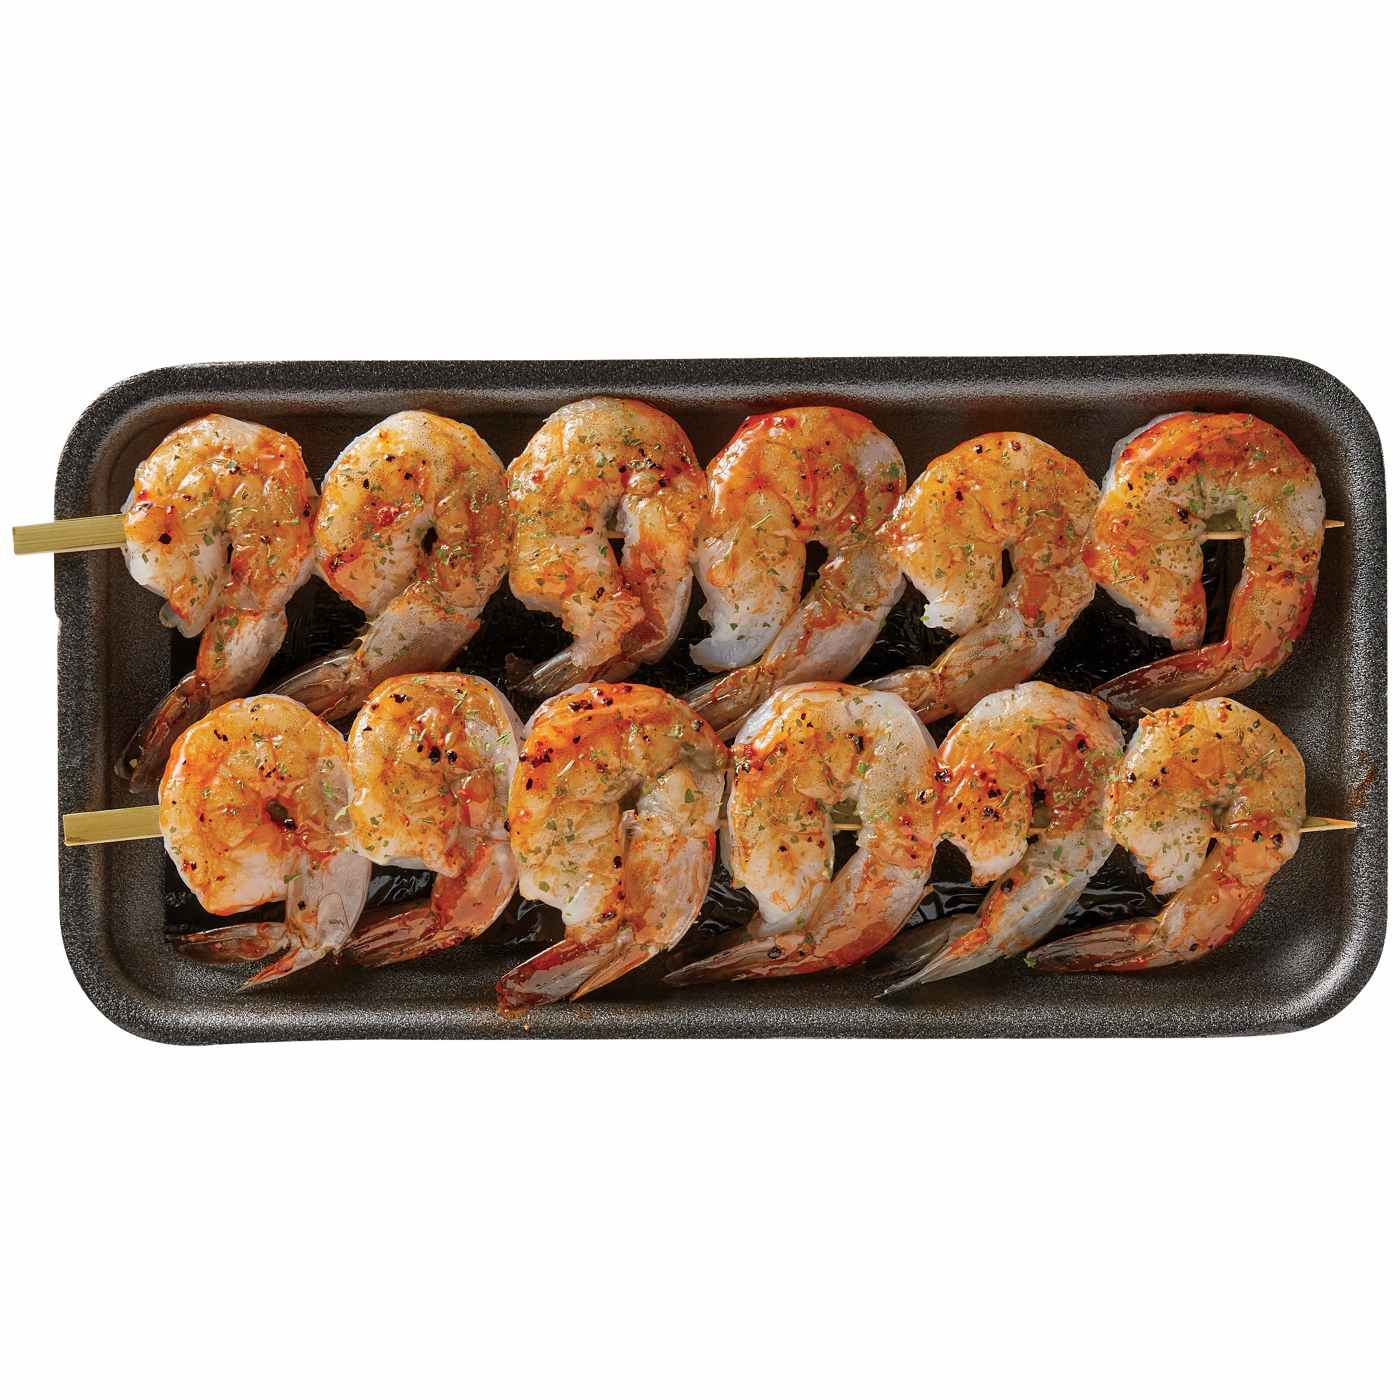 H-E-B Fish Market Marinated Shrimp Skewers - Smoky BBQ; image 1 of 2